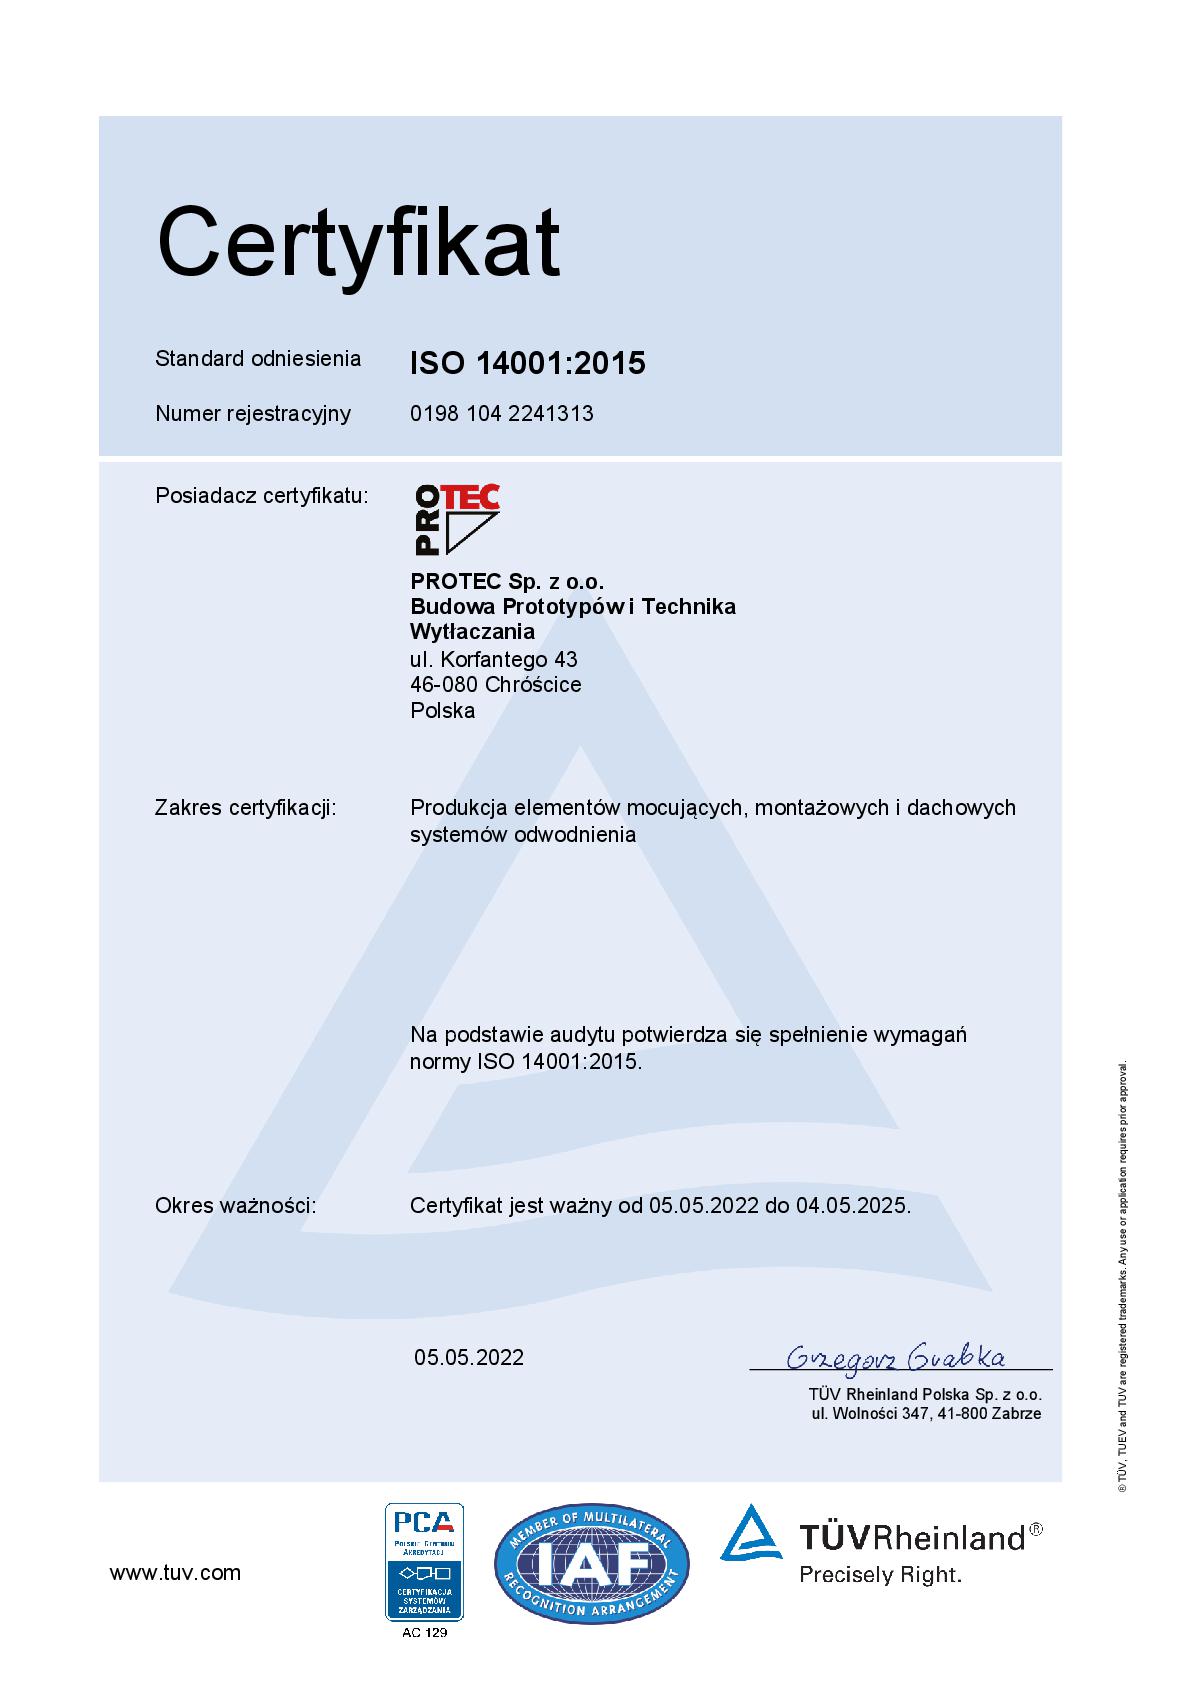 Certyfikat TÜV Rheinland Norm ISO 9001:2015 oraz ISO 14001:2015 dla PROTEC Sp. z o.o. 2